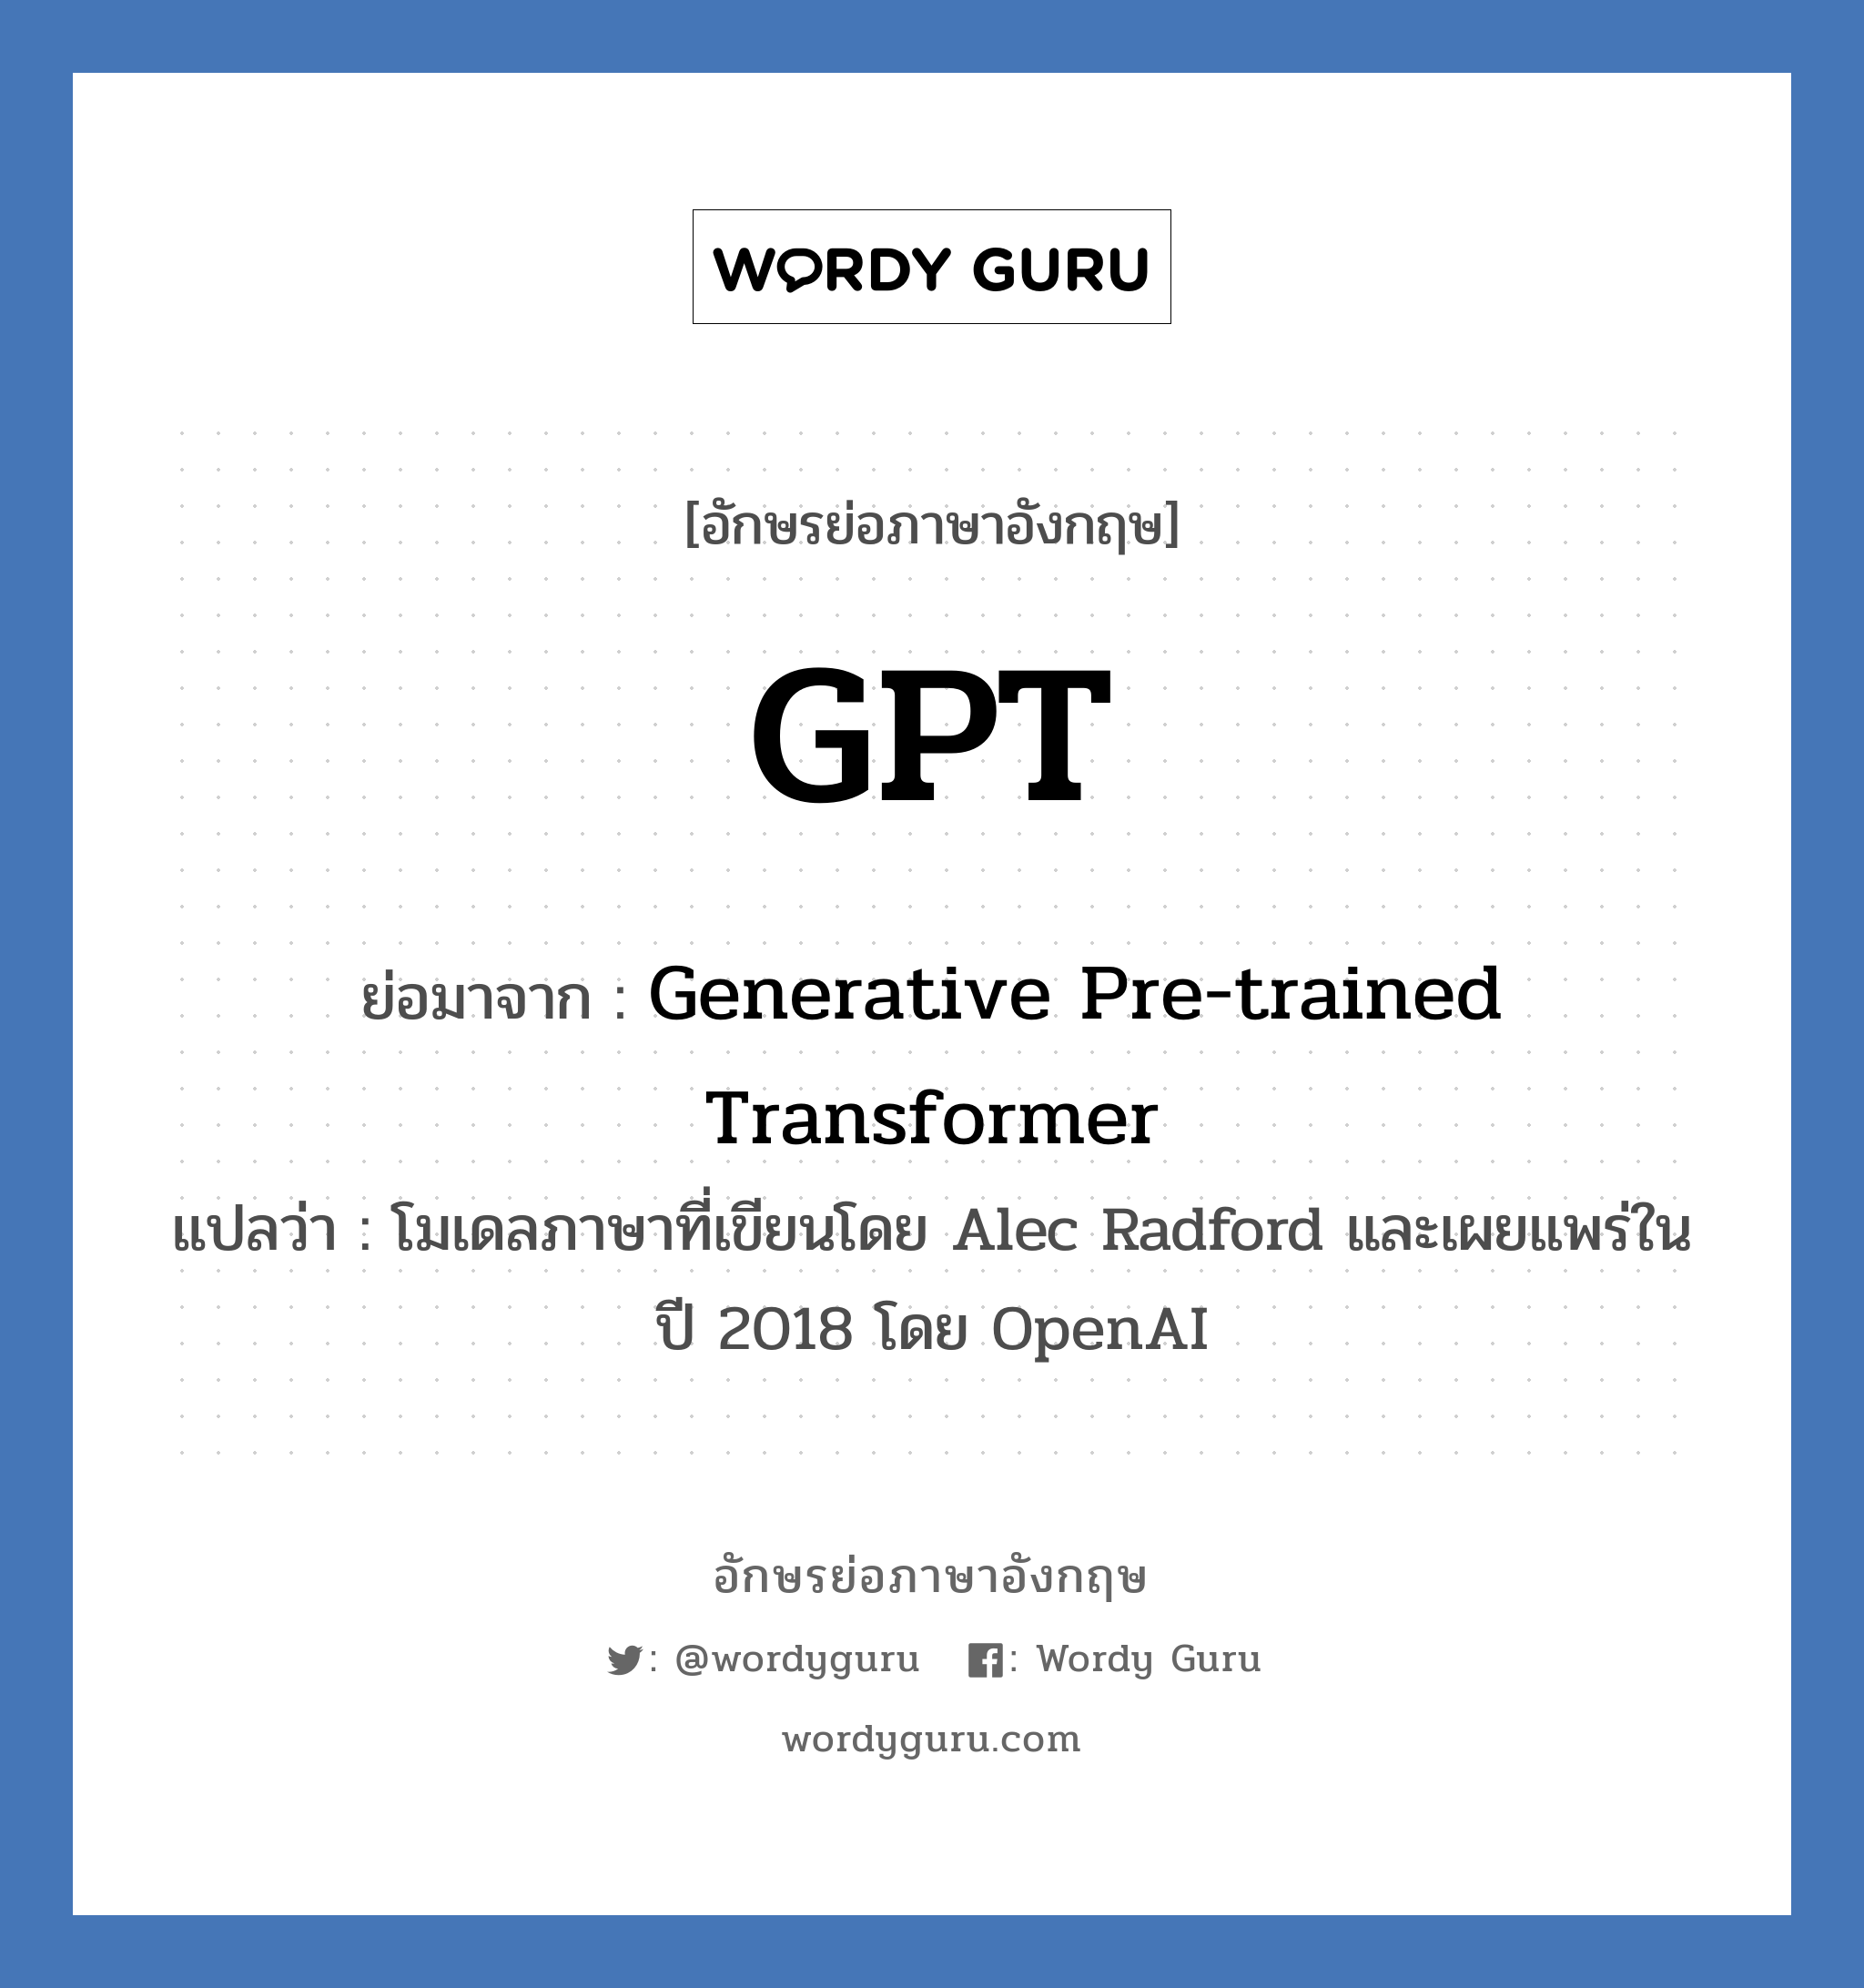 Generative Pre-trained Transformer คำย่อคือ? แปลว่า?, อักษรย่อภาษาอังกฤษ Generative Pre-trained Transformer ย่อมาจาก GPT แปลว่า โมเดลภาษาที่เขียนโดย Alec Radford และเผยแพร่ในปี 2018 โดย OpenAI หมวด IT